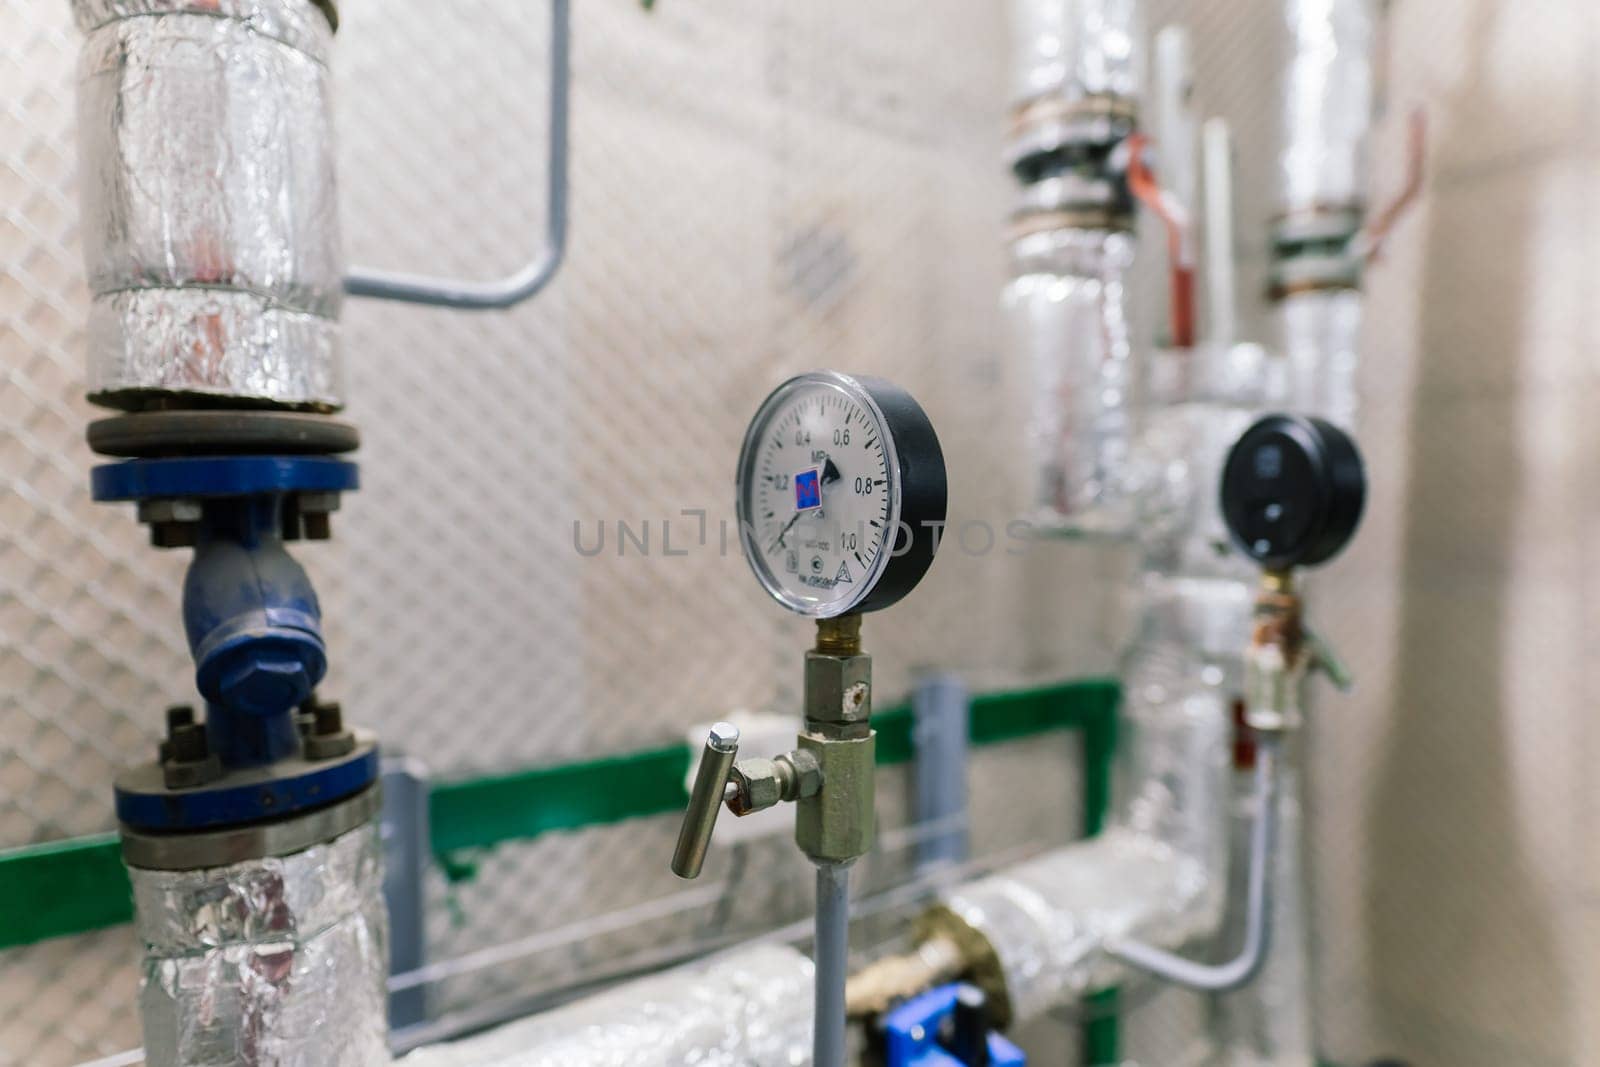 Pressure sensor in an industrial boiler room. Barometer in a heating system. Close-up.